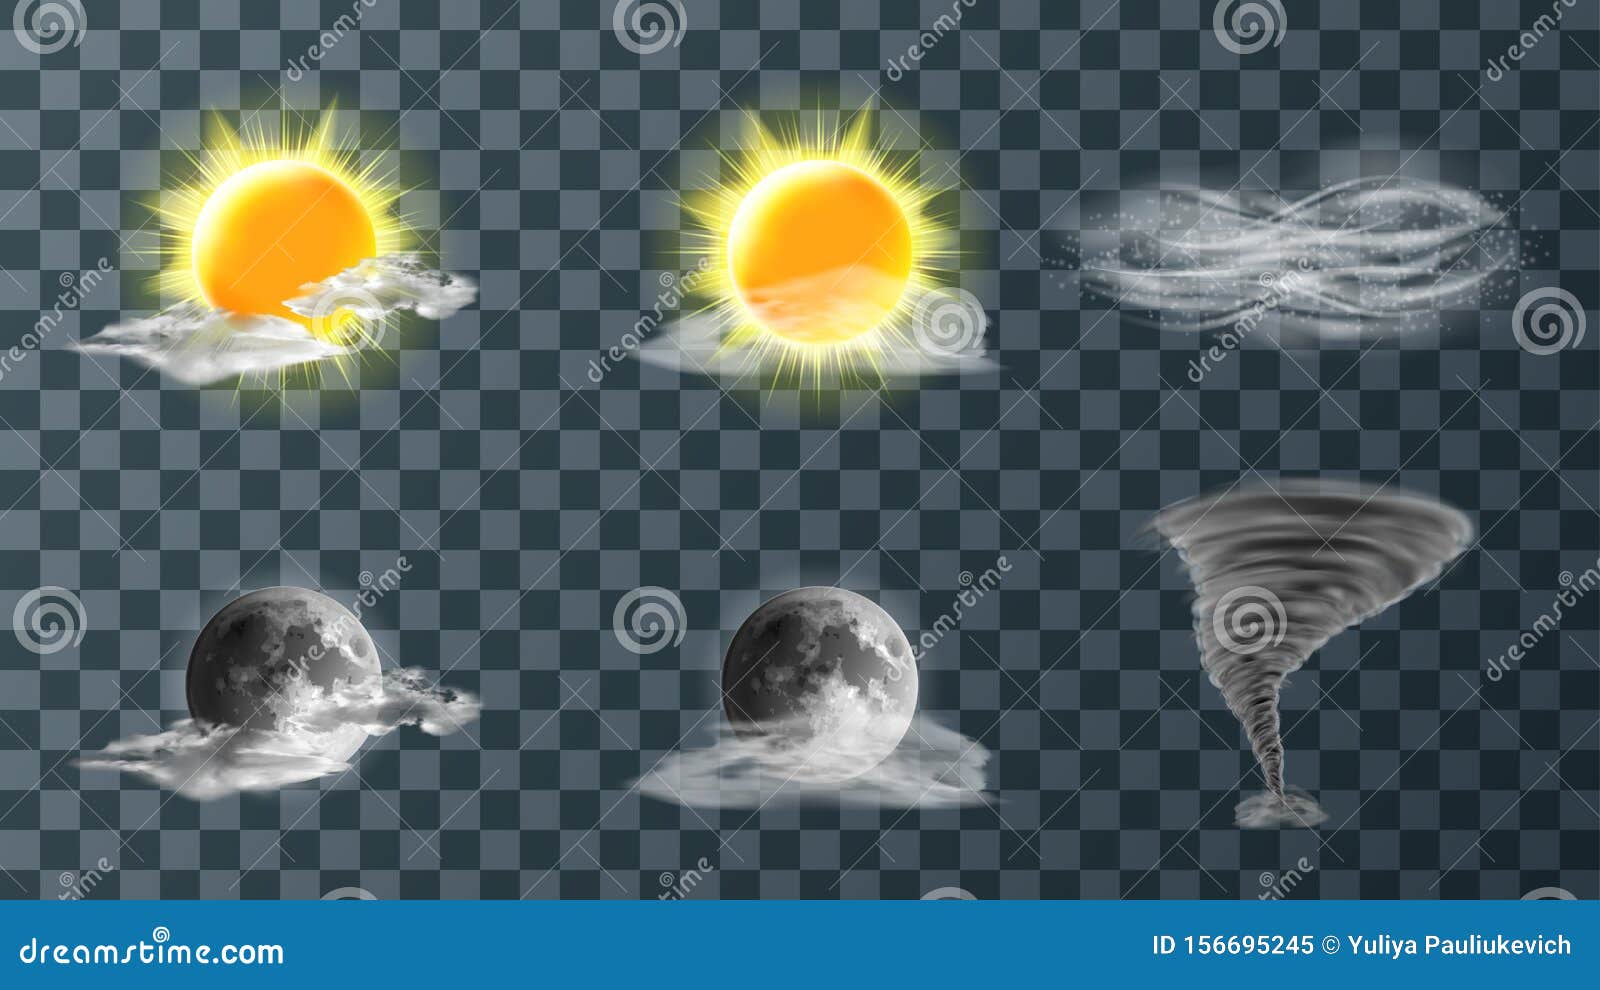 weather meteo icons realistic set